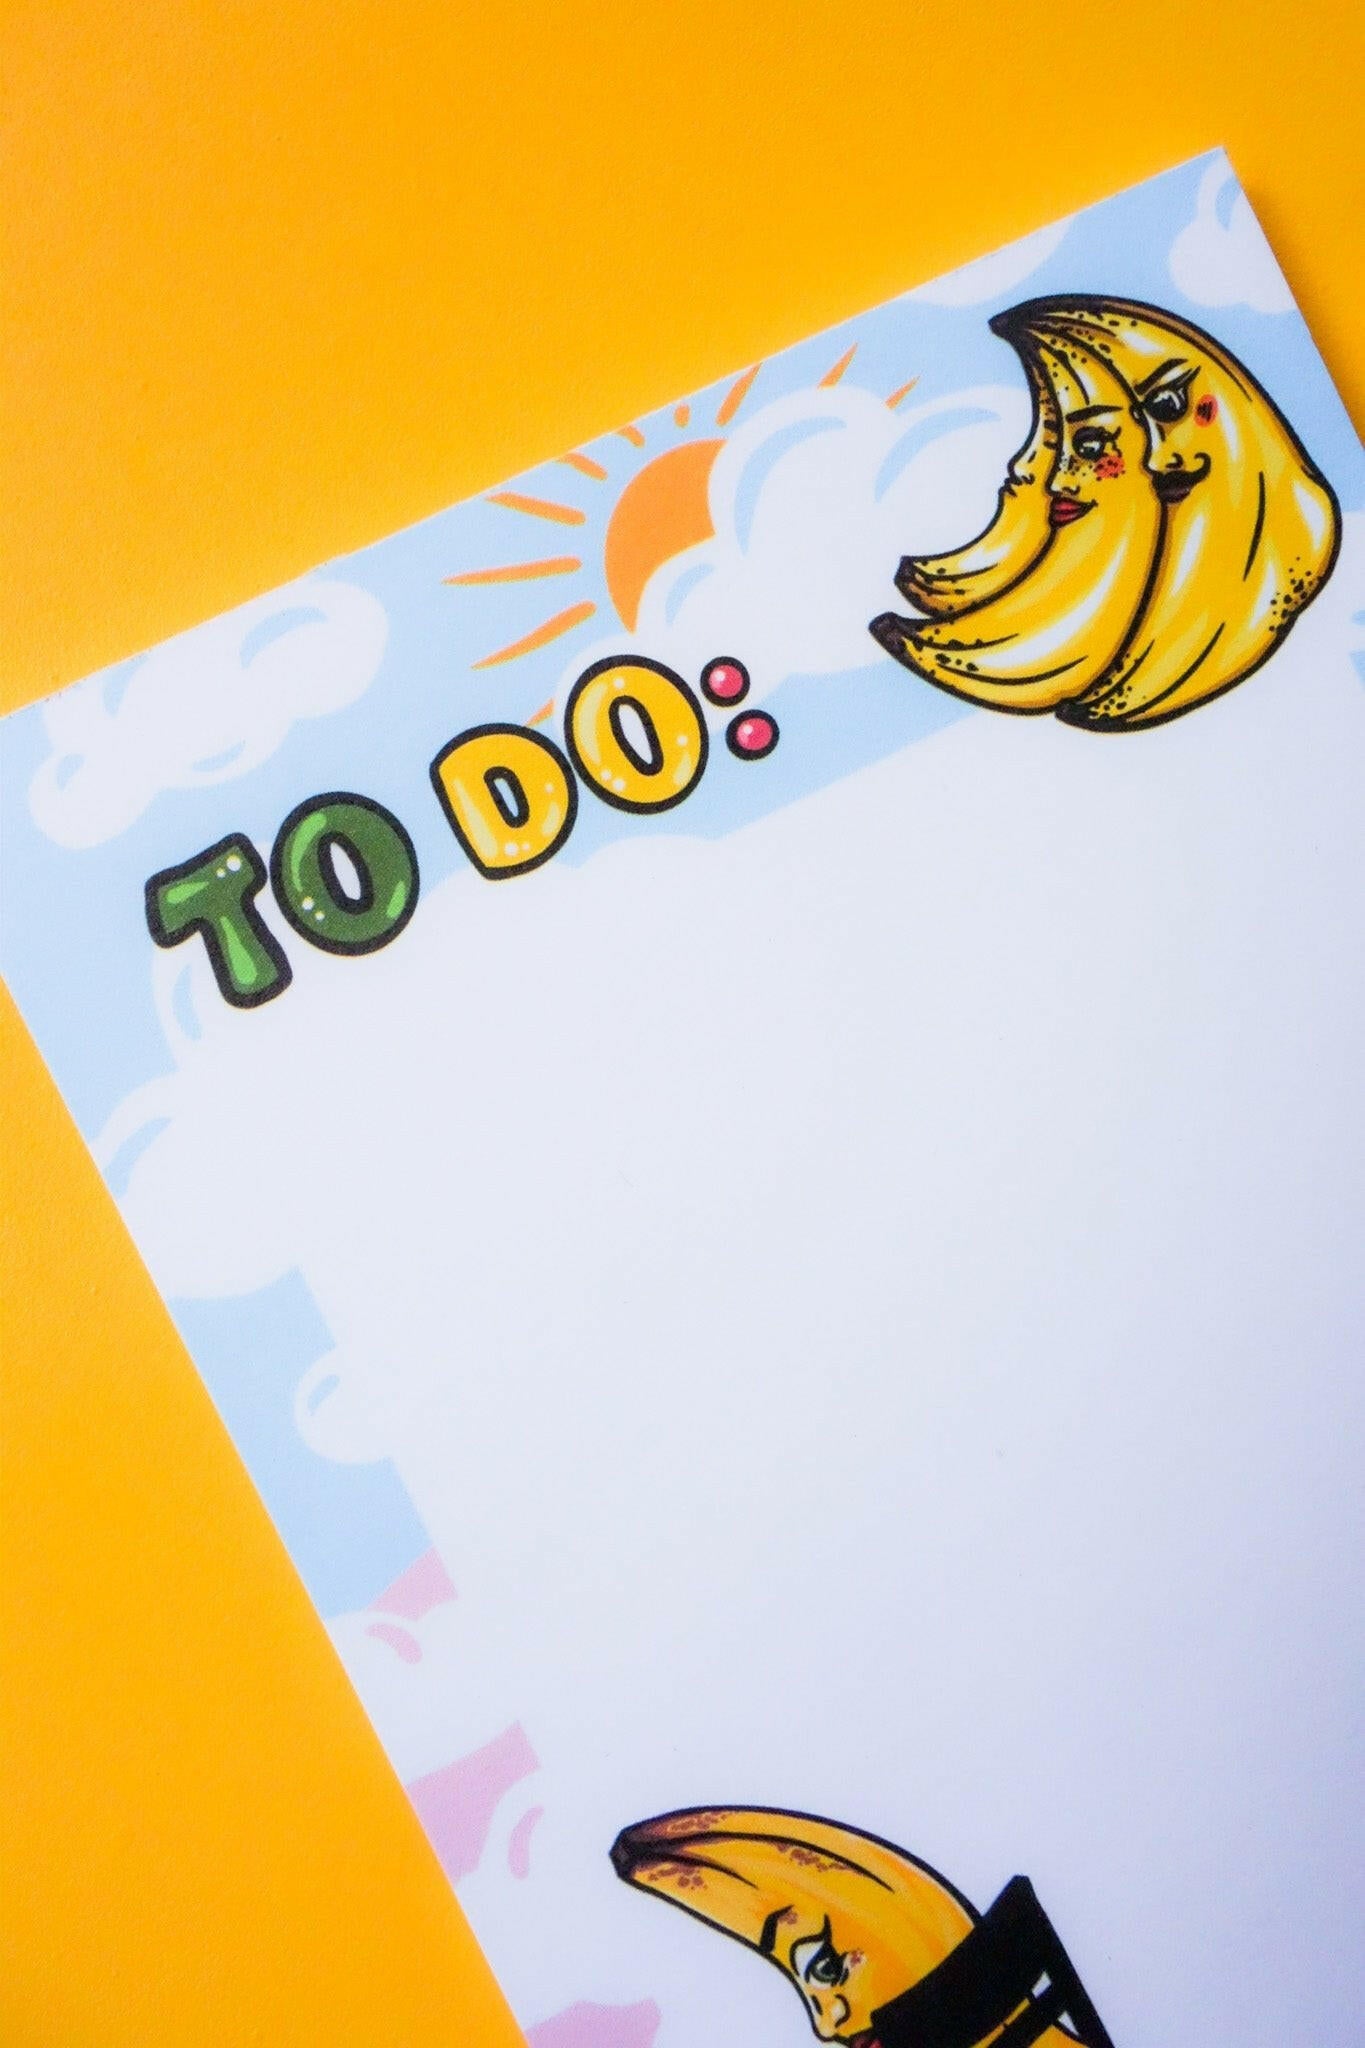 Banana Booties To Do List Notepad - Cheeky Art Studio